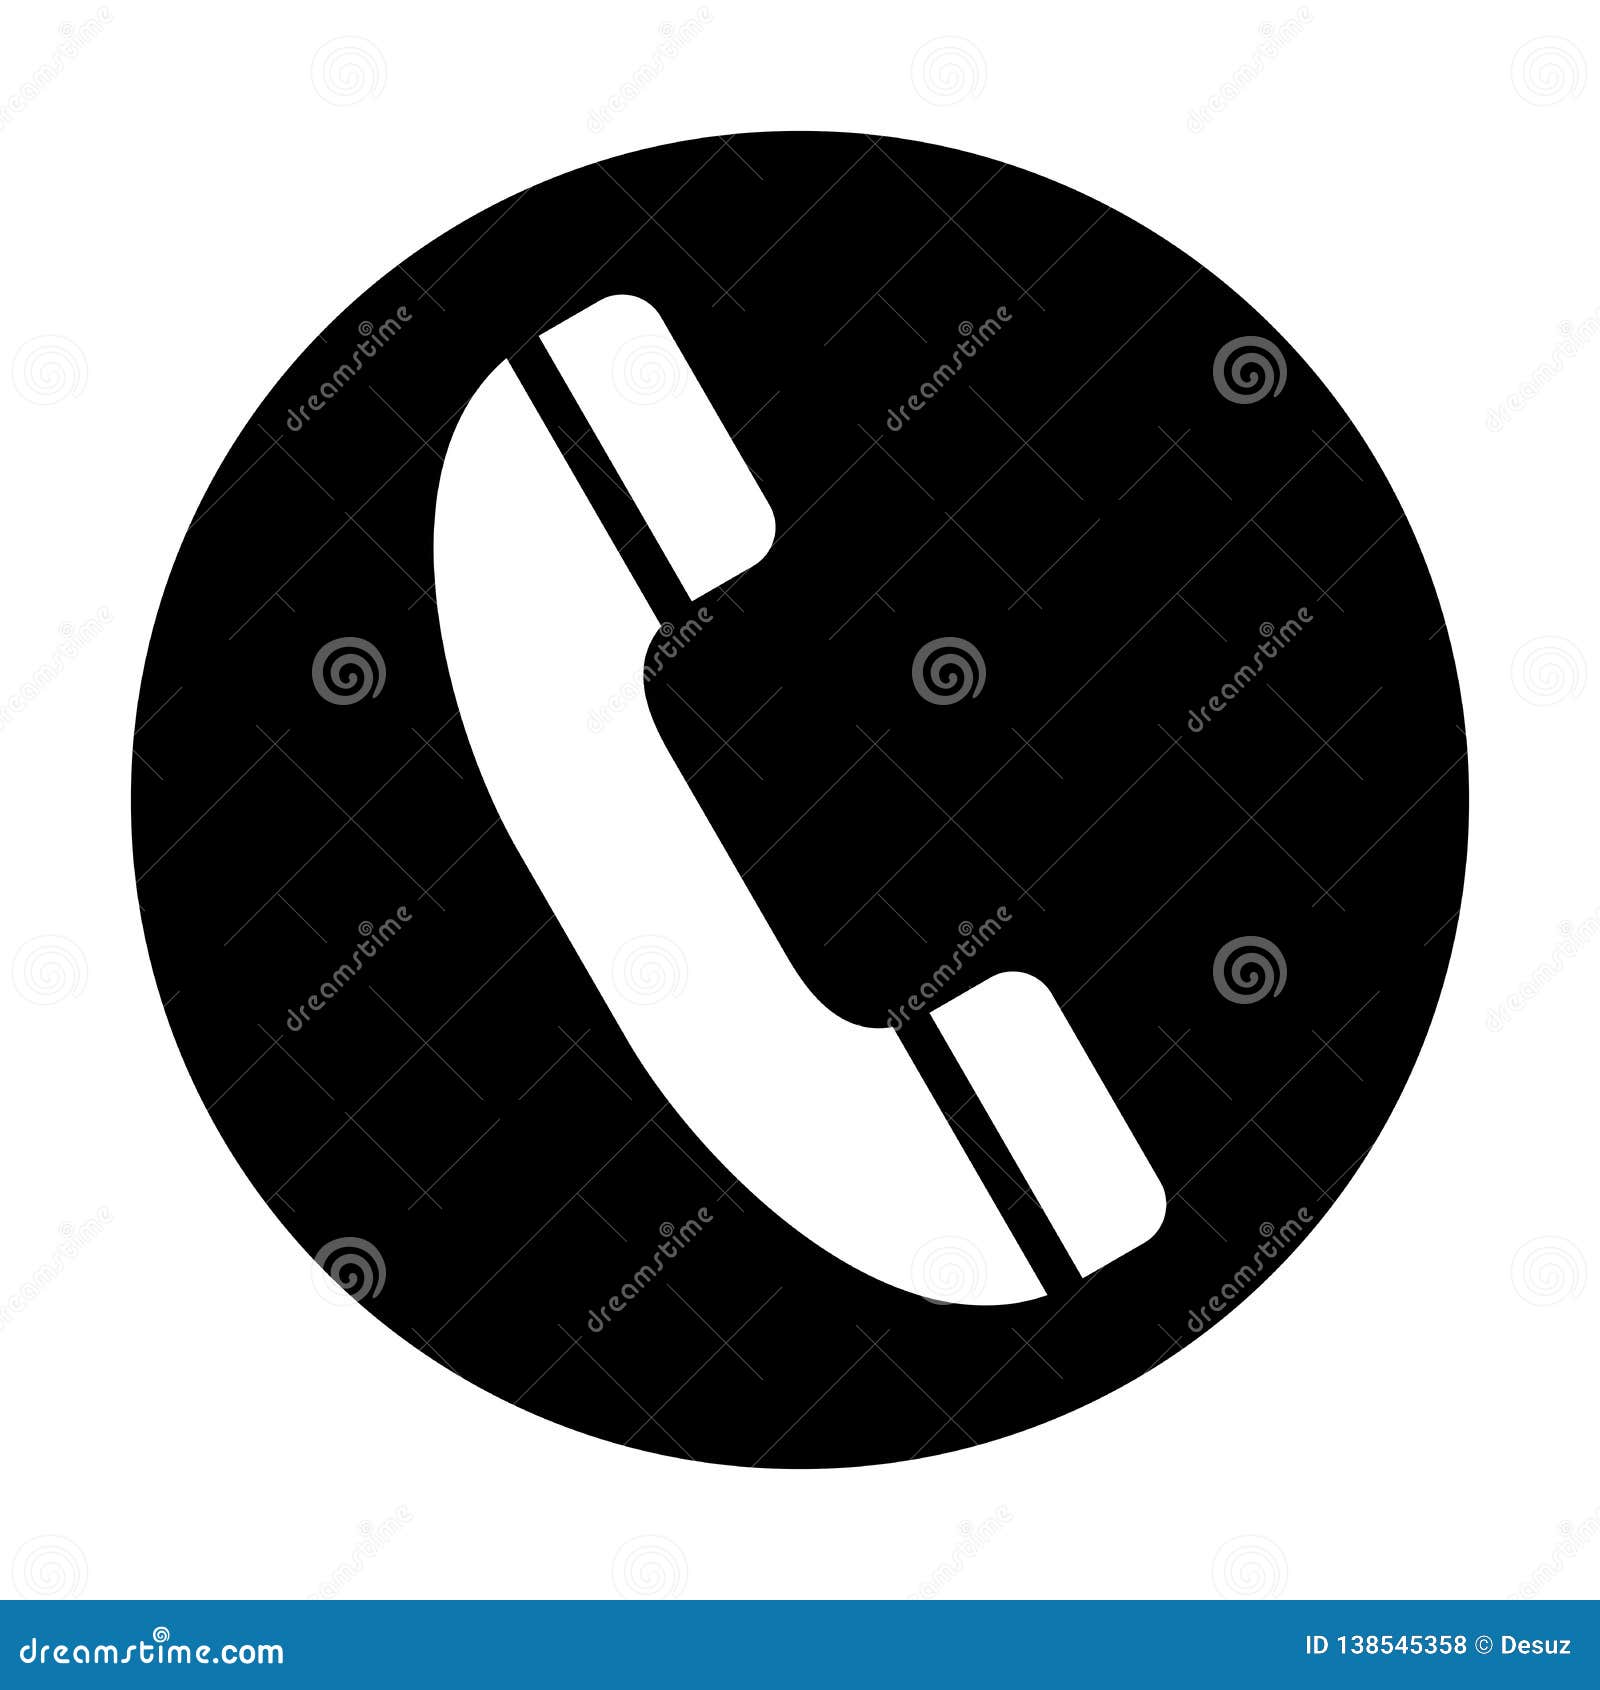 Call phone icon | Stock vector | Colourbox